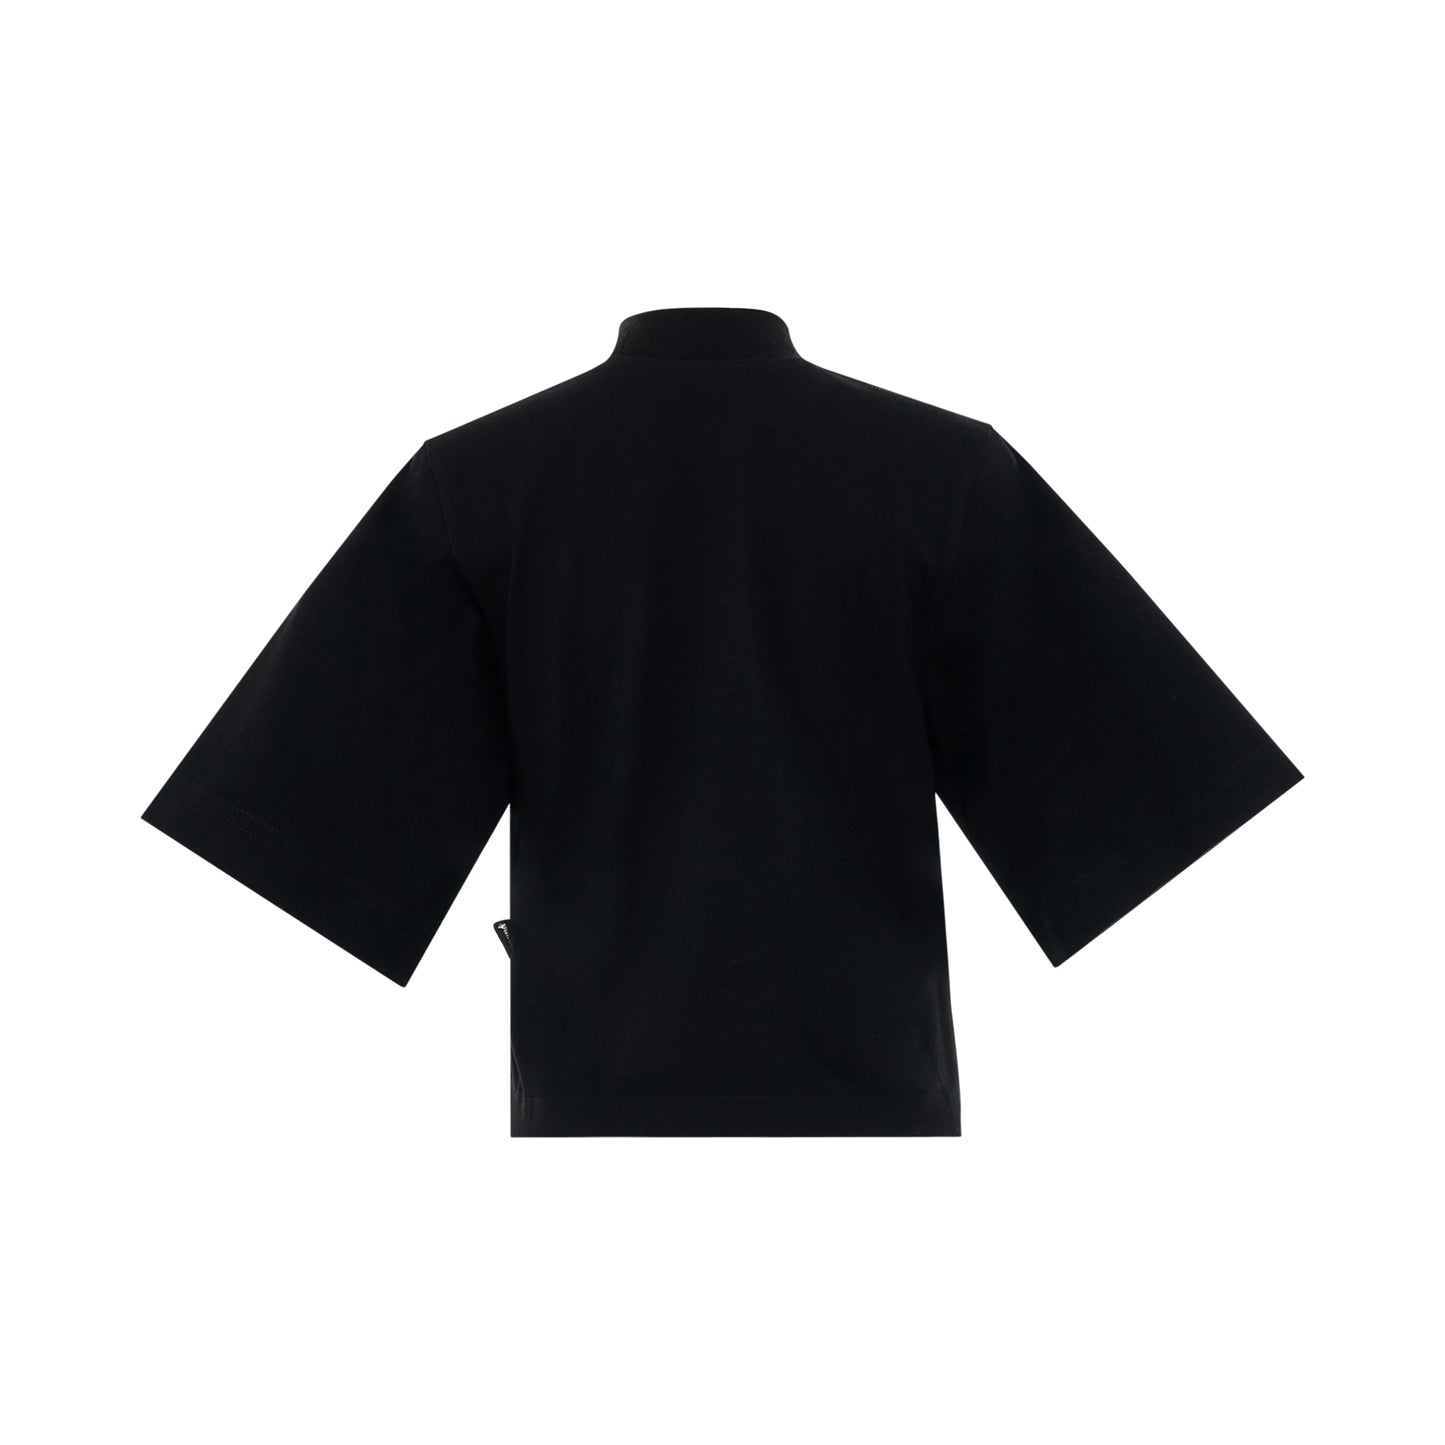 Mirage Boxy T-Shirt in Black